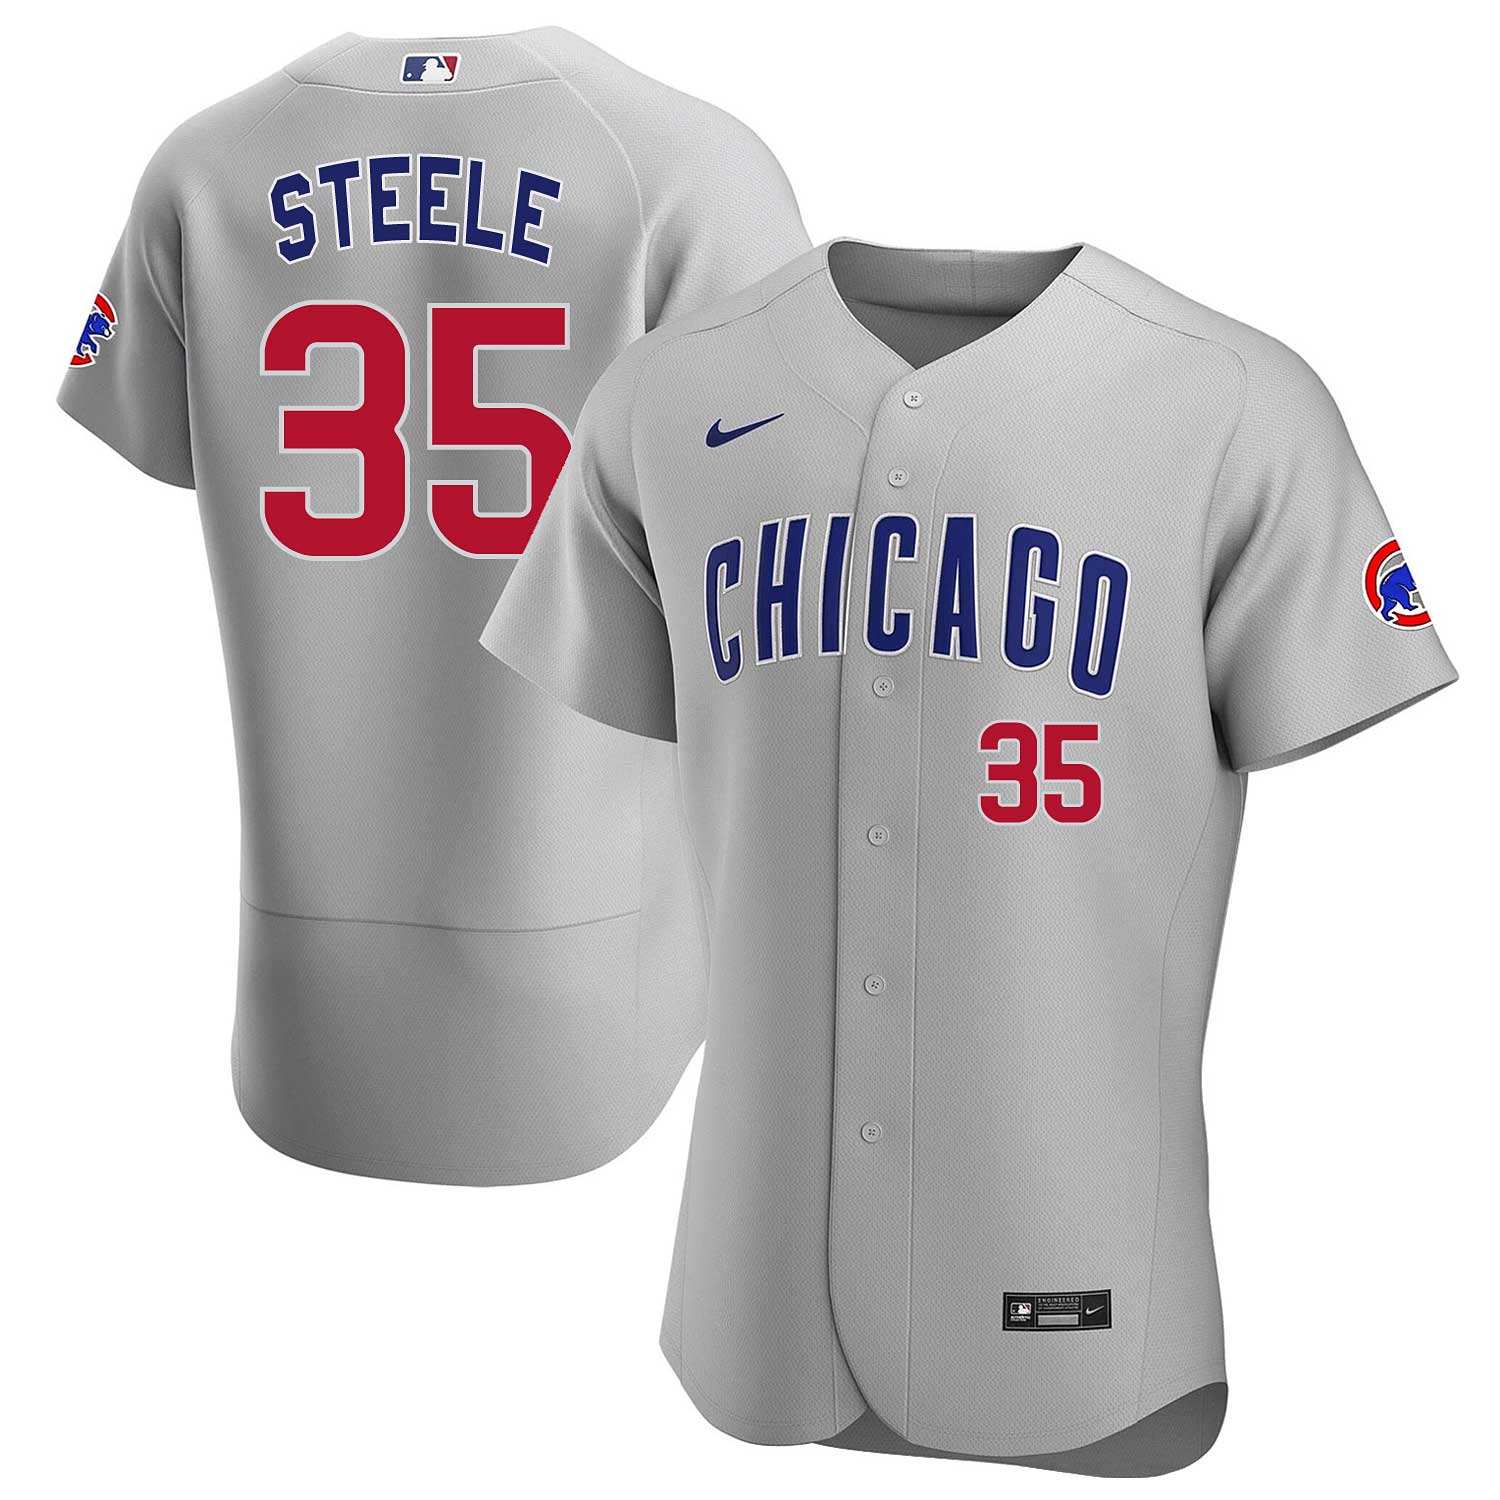 Genuine Merchandise, Shirts, Chicago Cubs Jersey